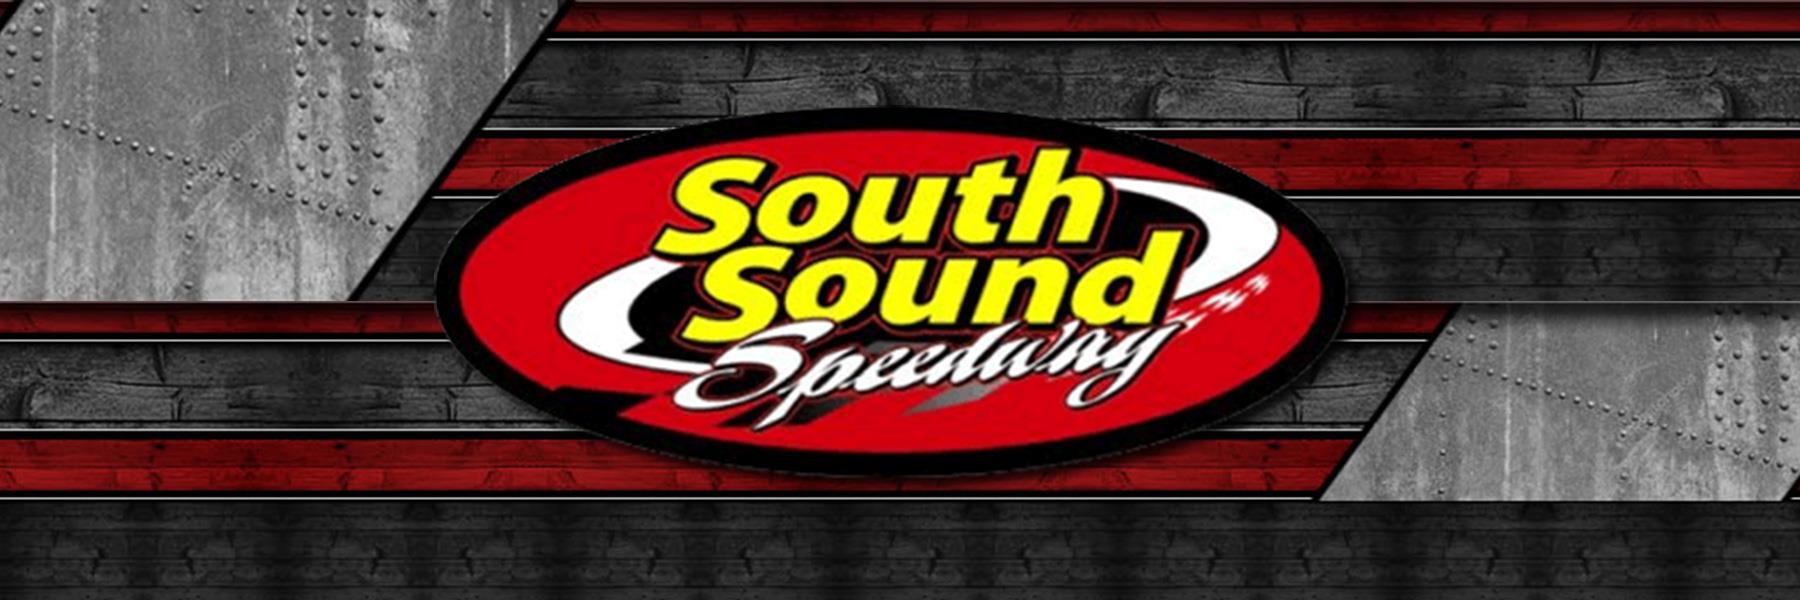 7/9/2022 - South Sound Speedway